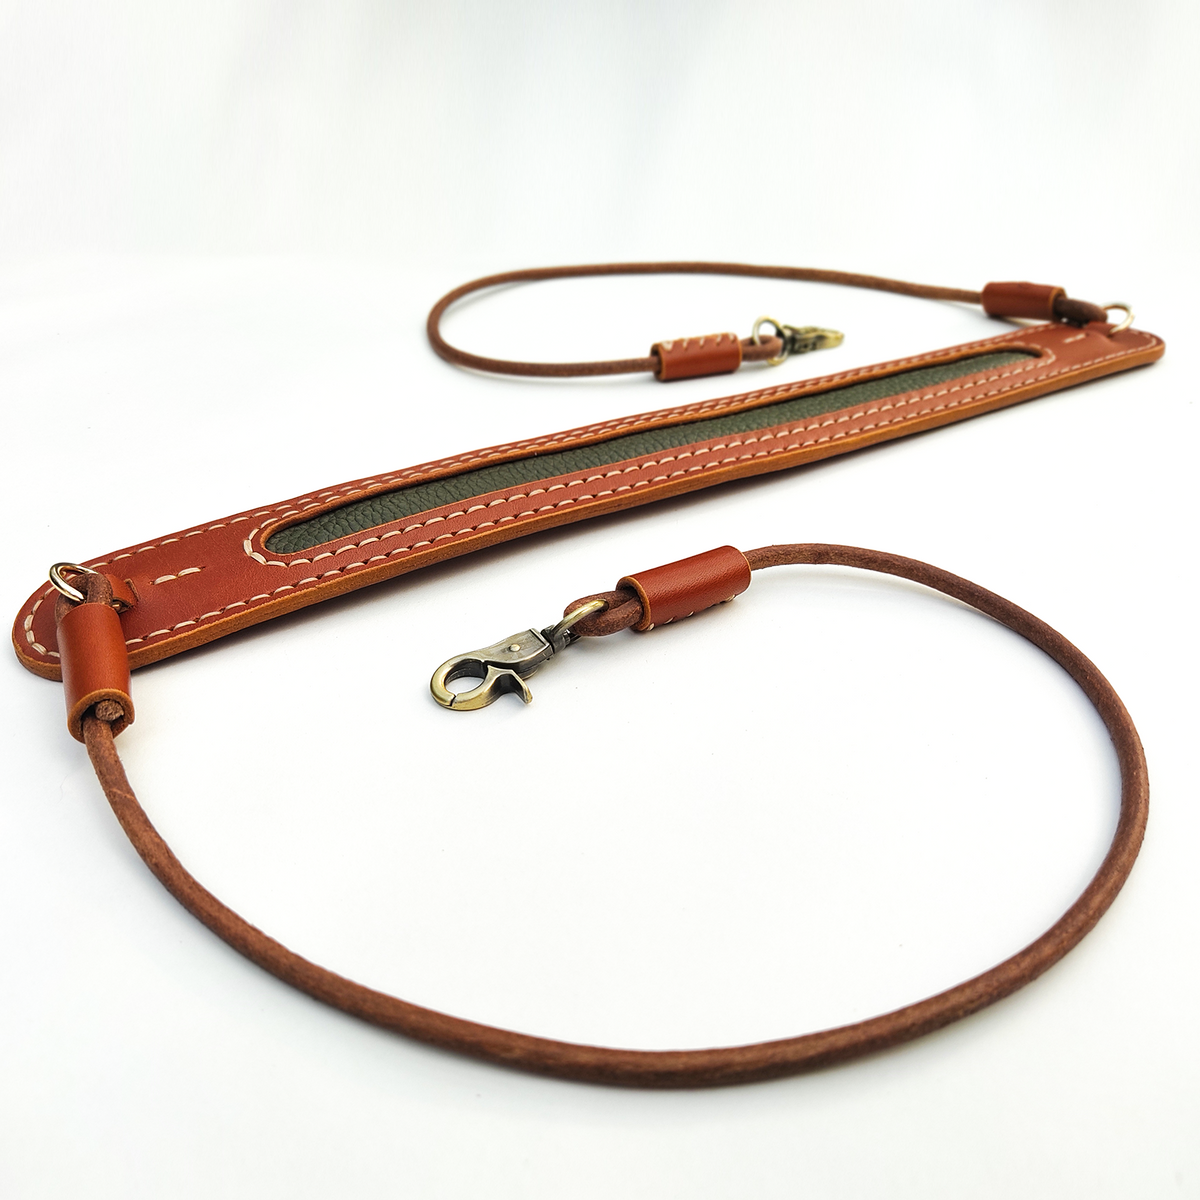 DIY leather strap pad pattern - Leather bag strap pad / camera strap p ...